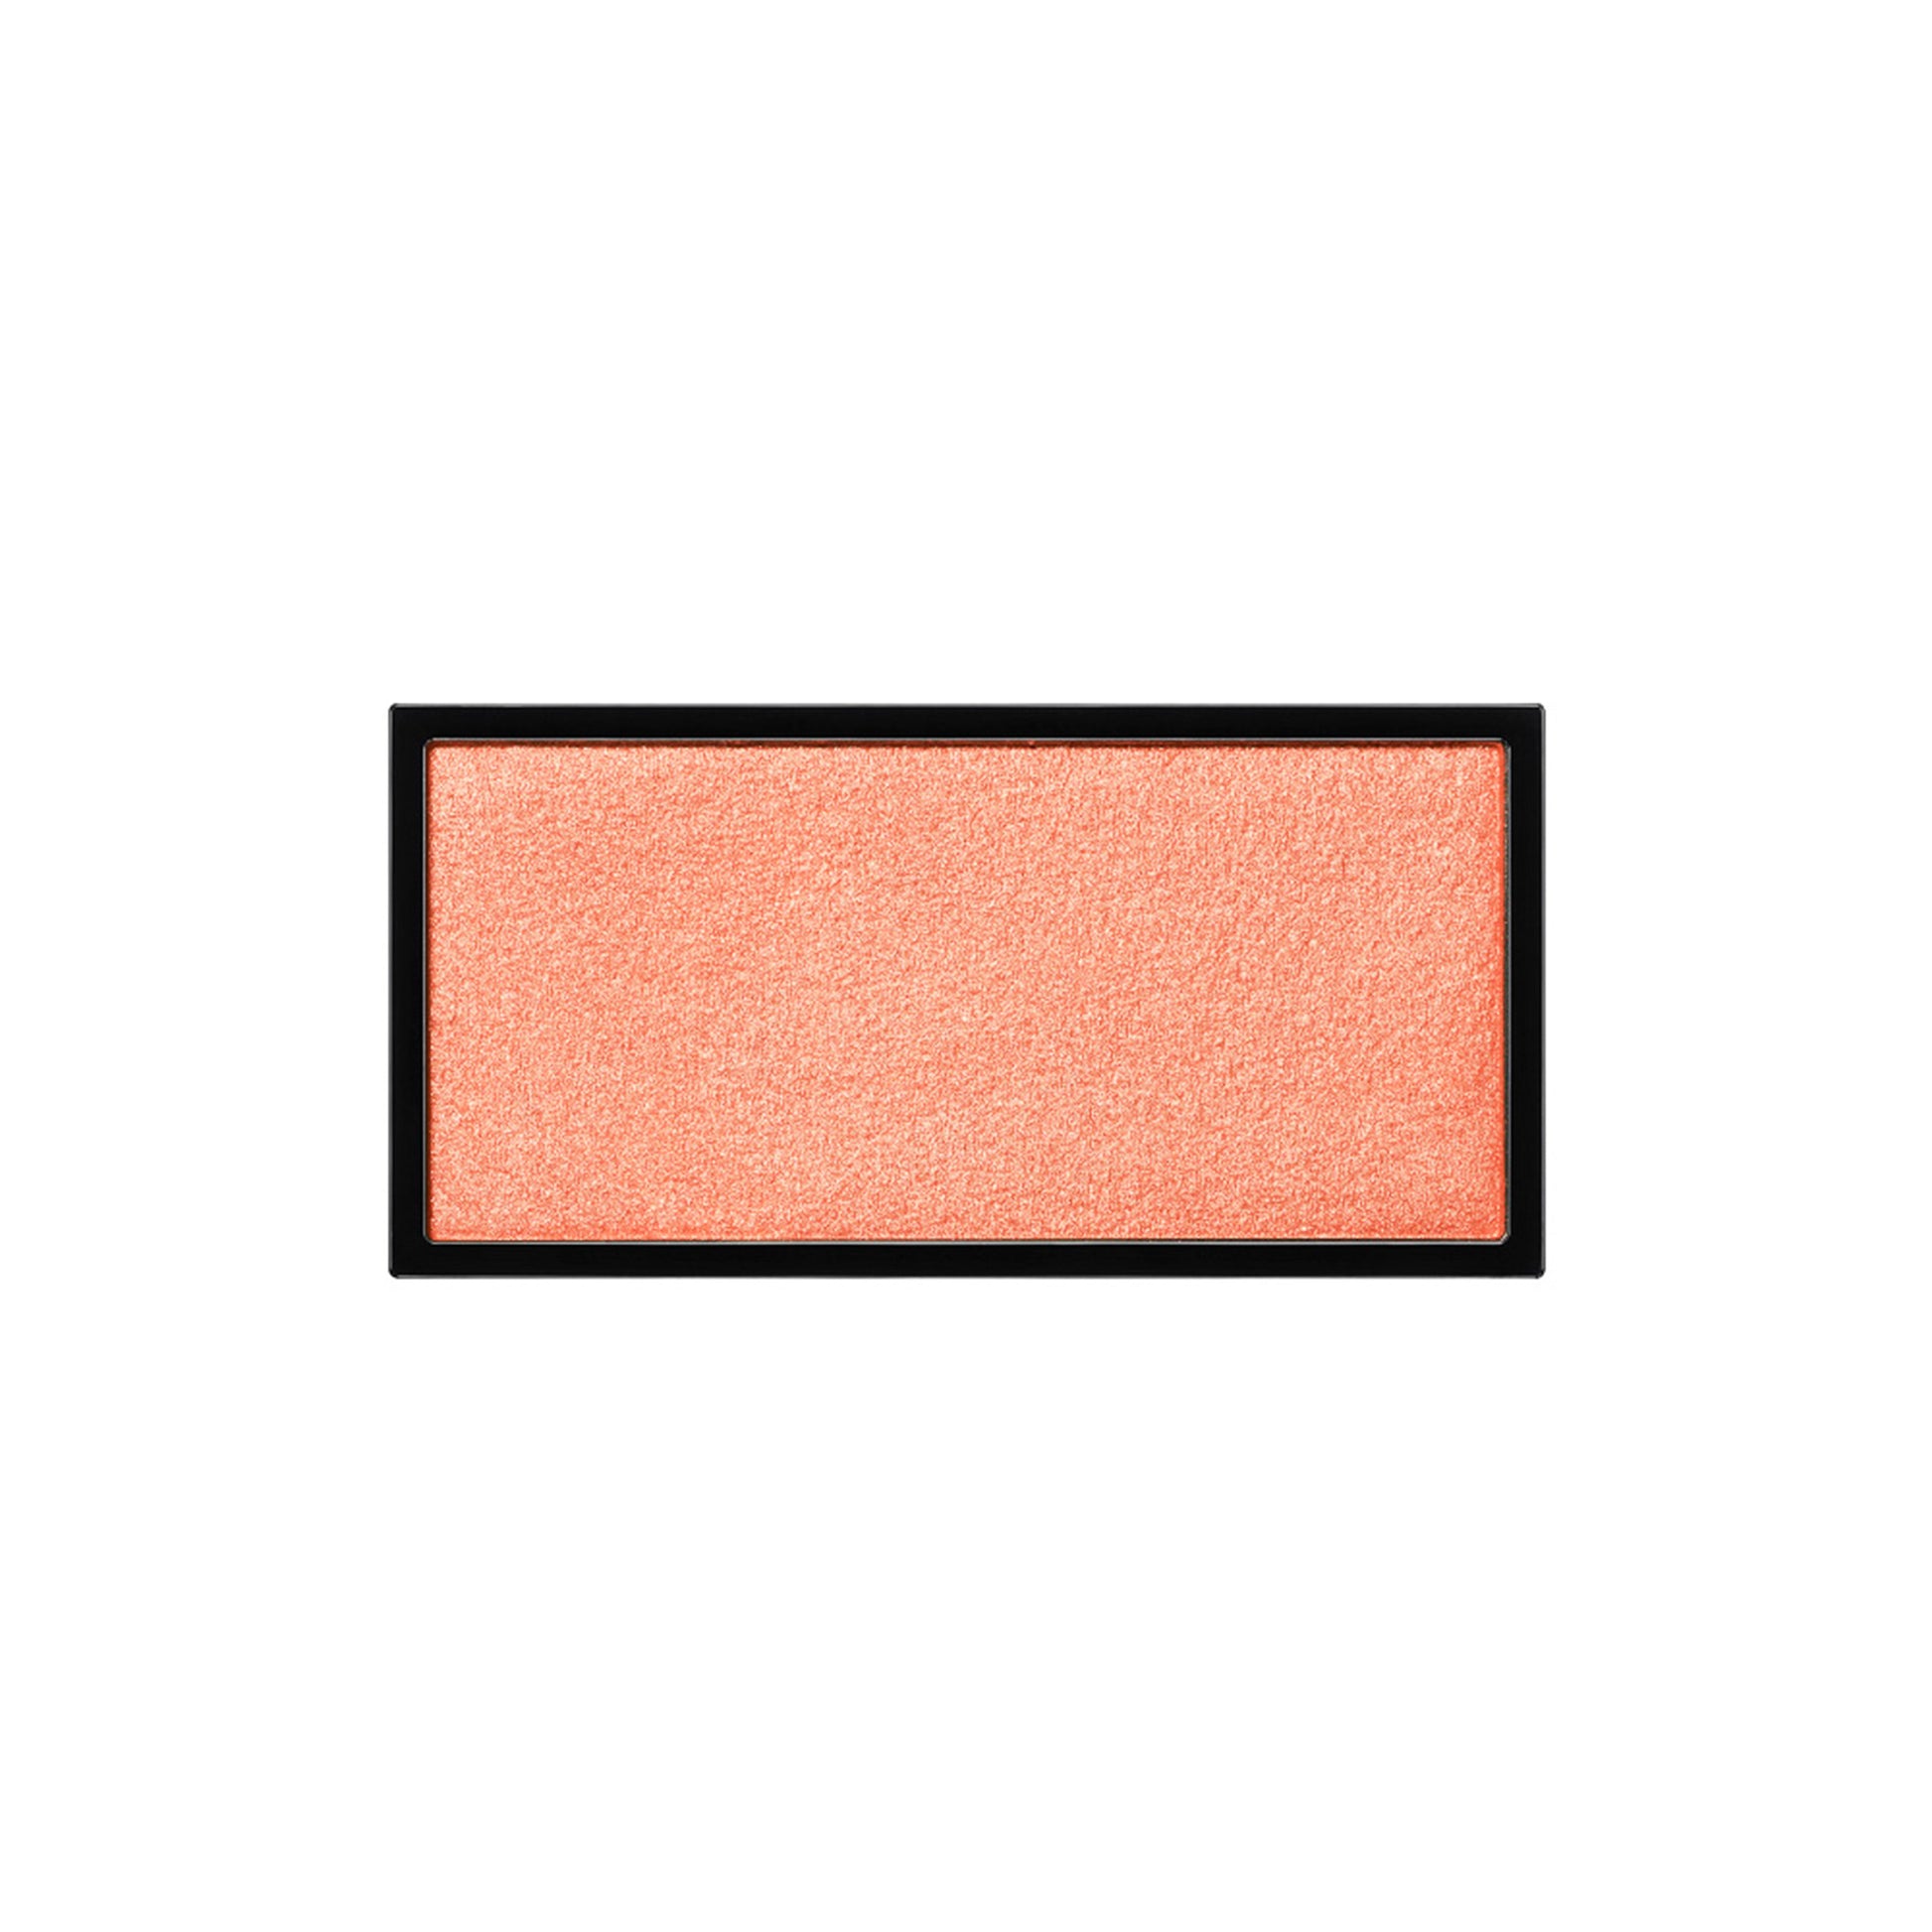 A rectangle shaped powder blush pan in a sunset orange tone